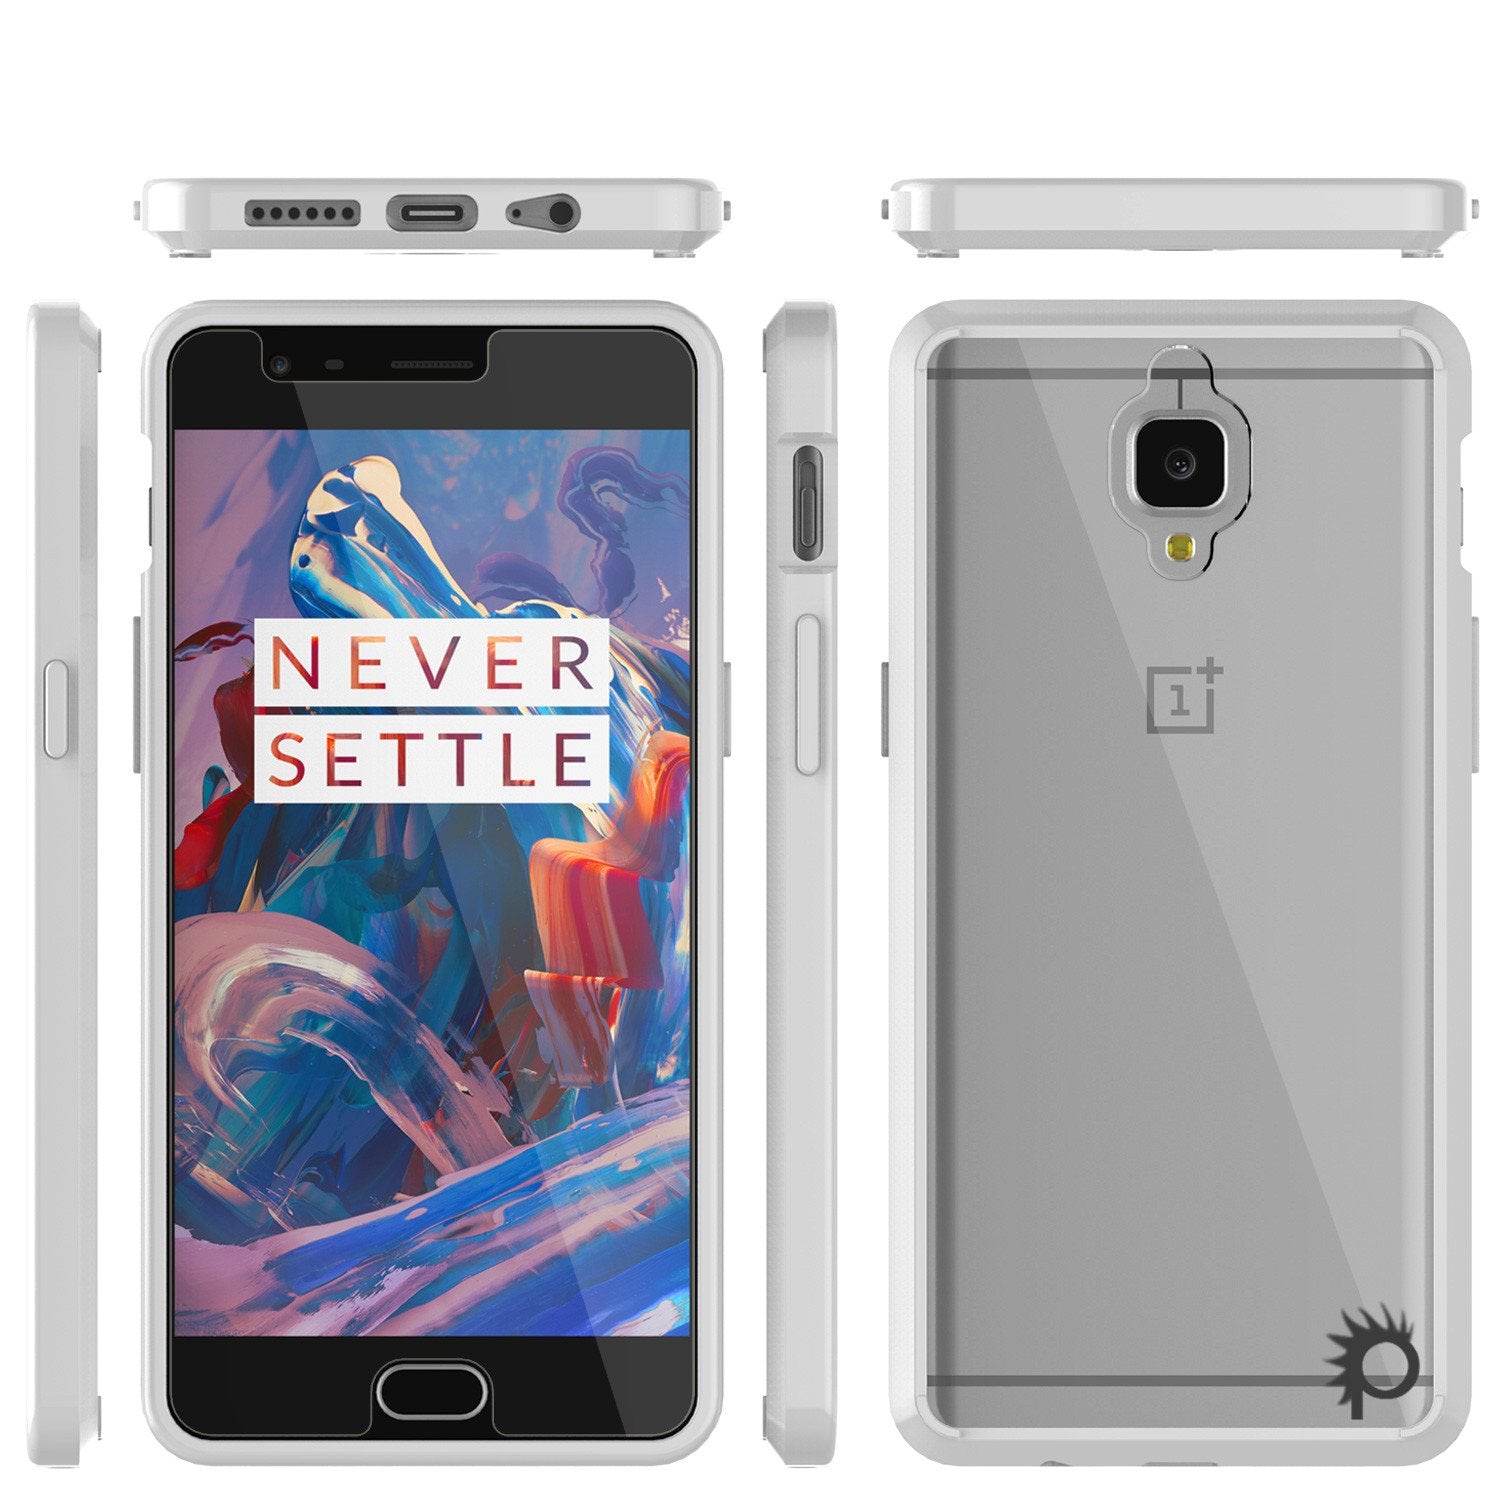 OnePlus 3 Case Punkcase® LUCID 2.0 White Series w/ SHIELD GLASS Lifetime Warranty Exchange